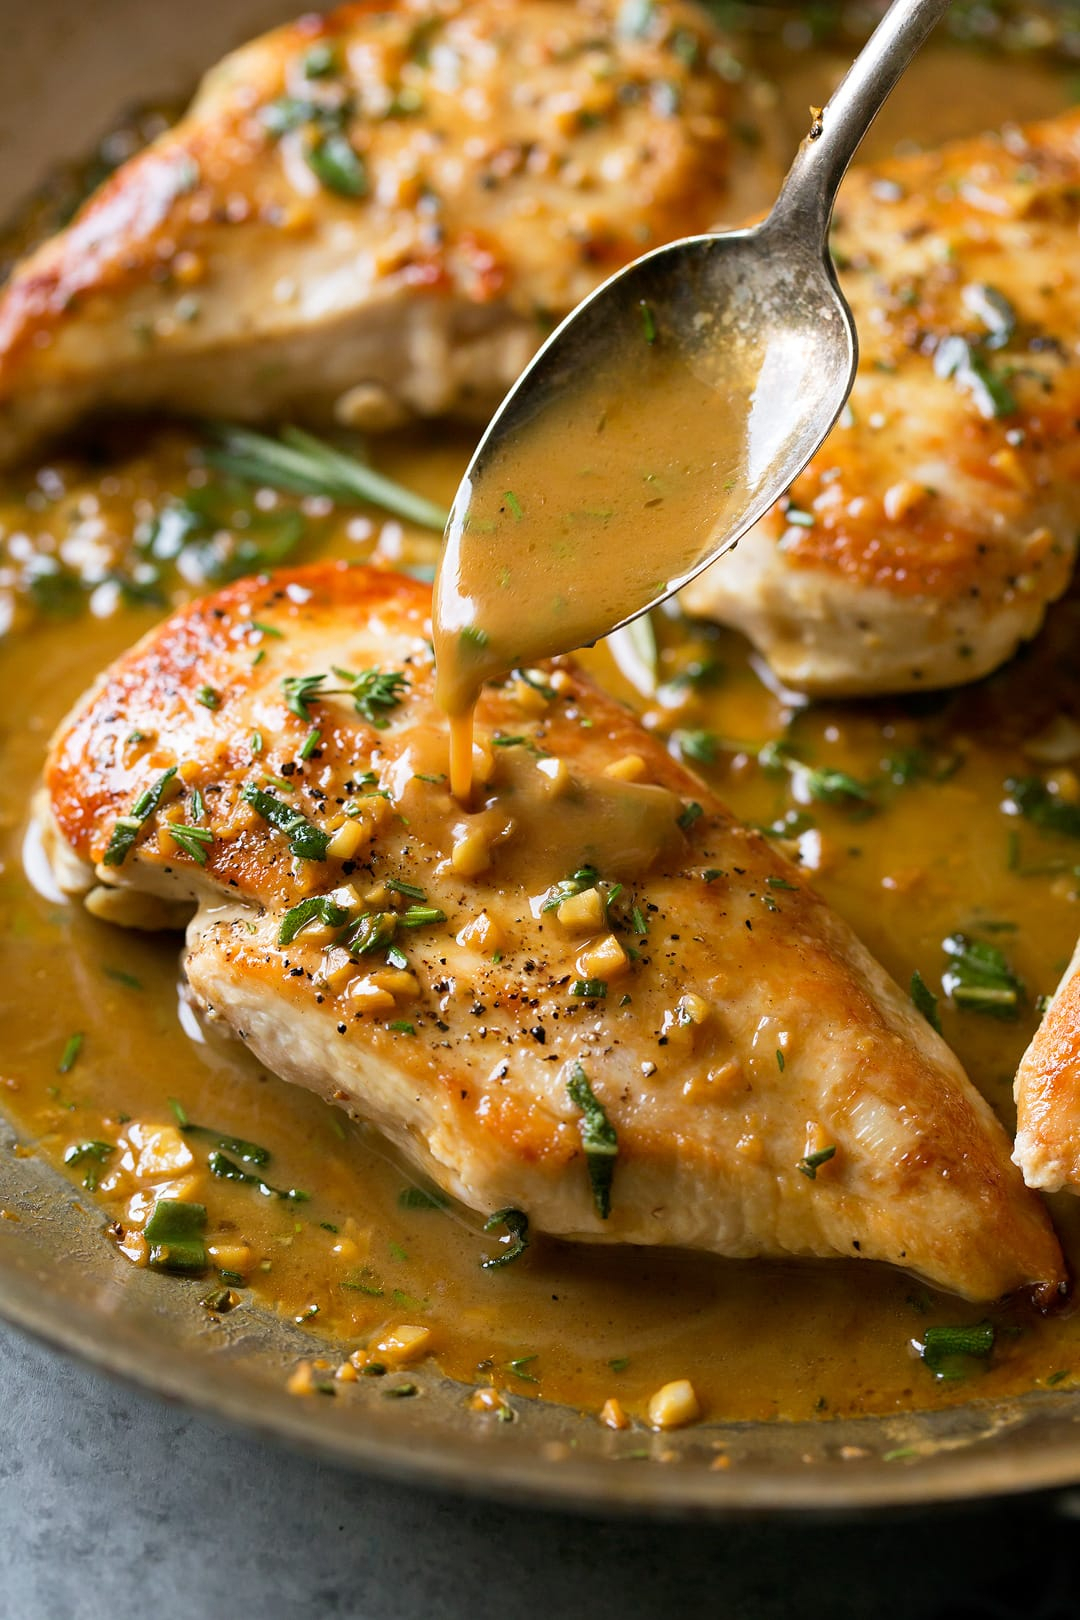 10 Stylish Dinner Ideas With Boneless Chicken Breast skillet chicken recipe with garlic herb butter sauce cooking classy 2022